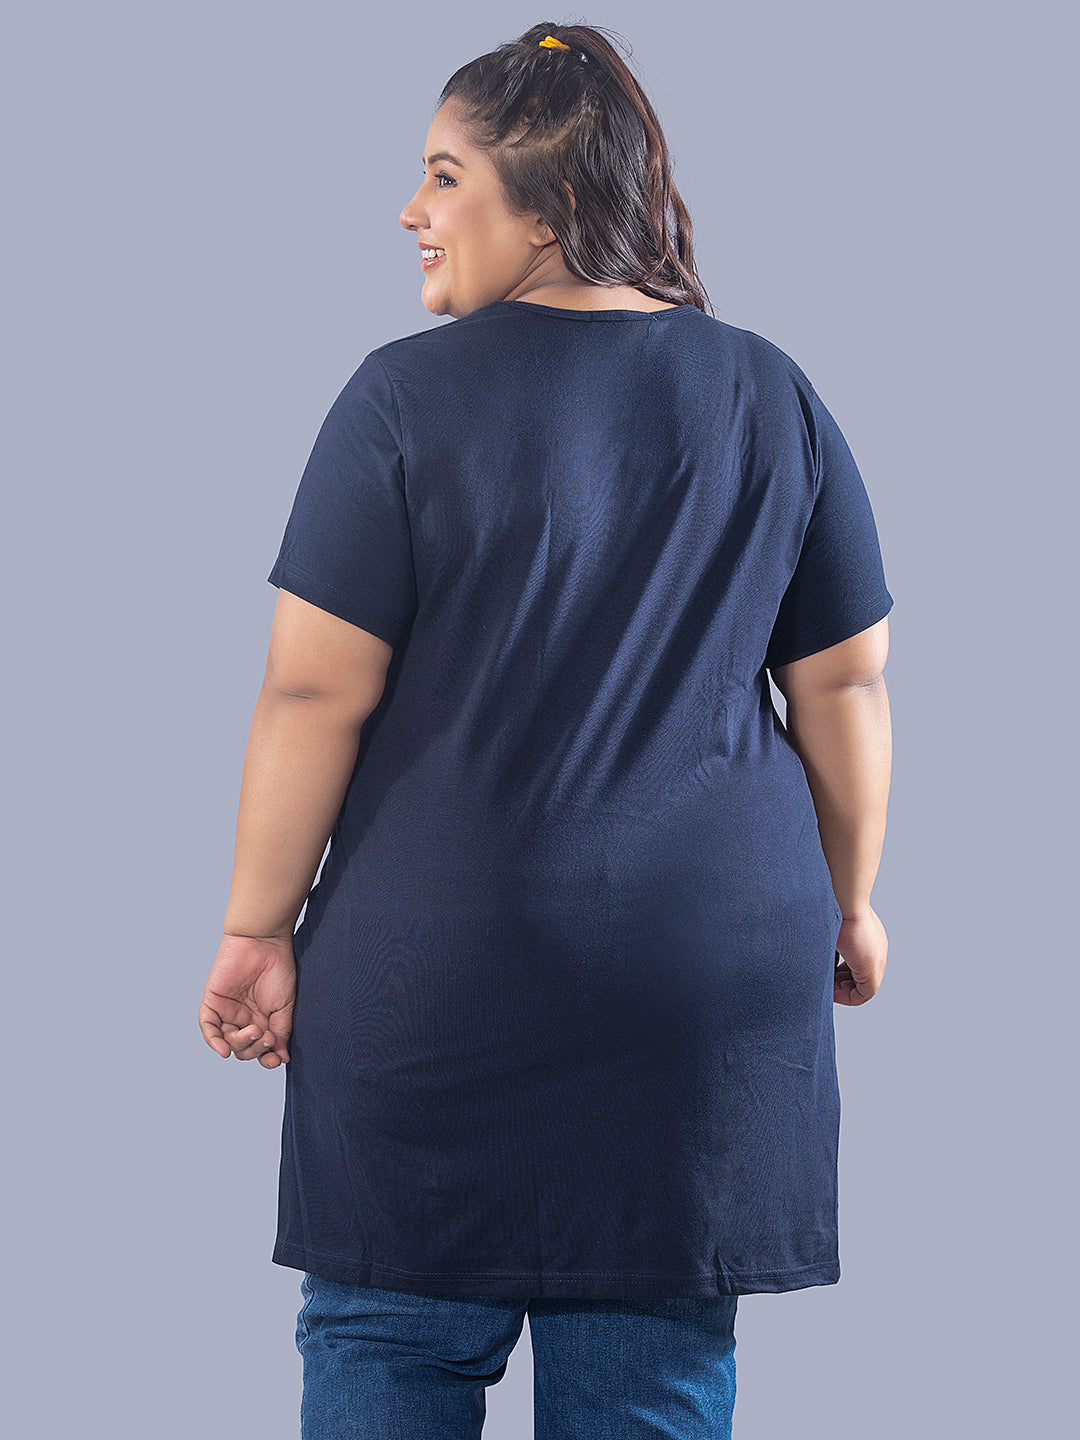 Plus Size Long T-shirt For Women - Half Sleeve - Navy Blue